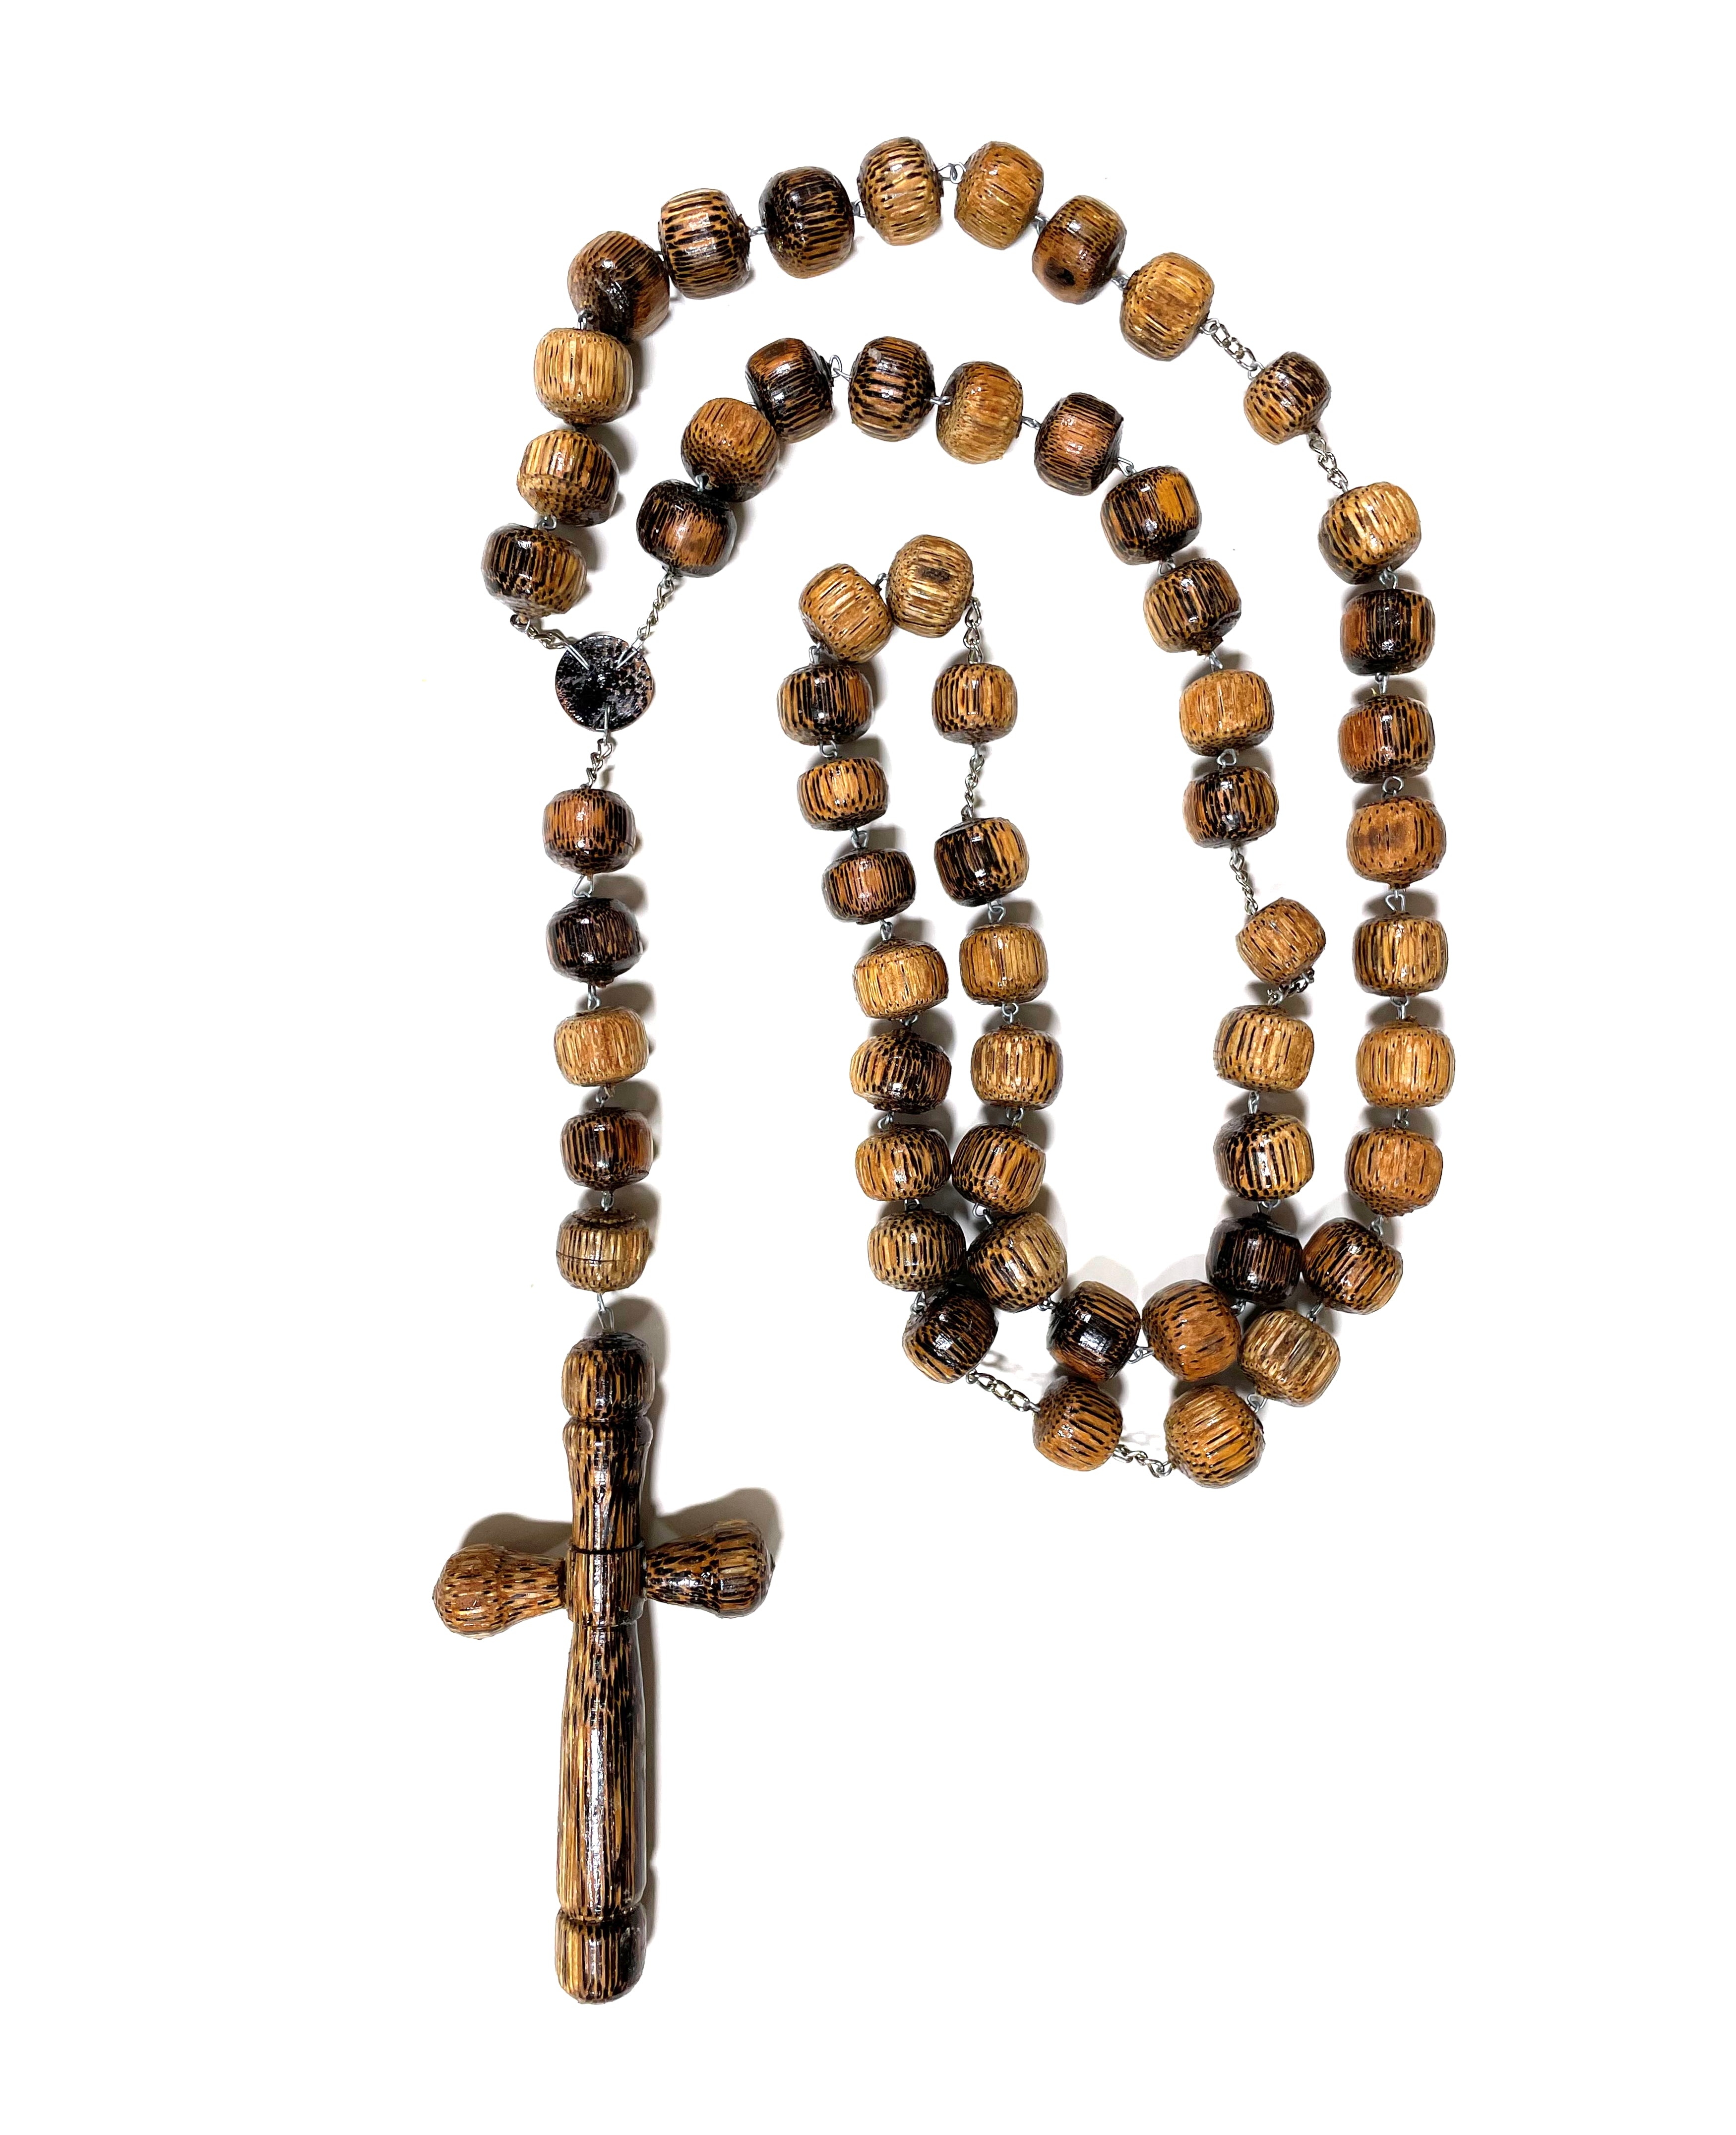 Rustic Wood Wall Rosary